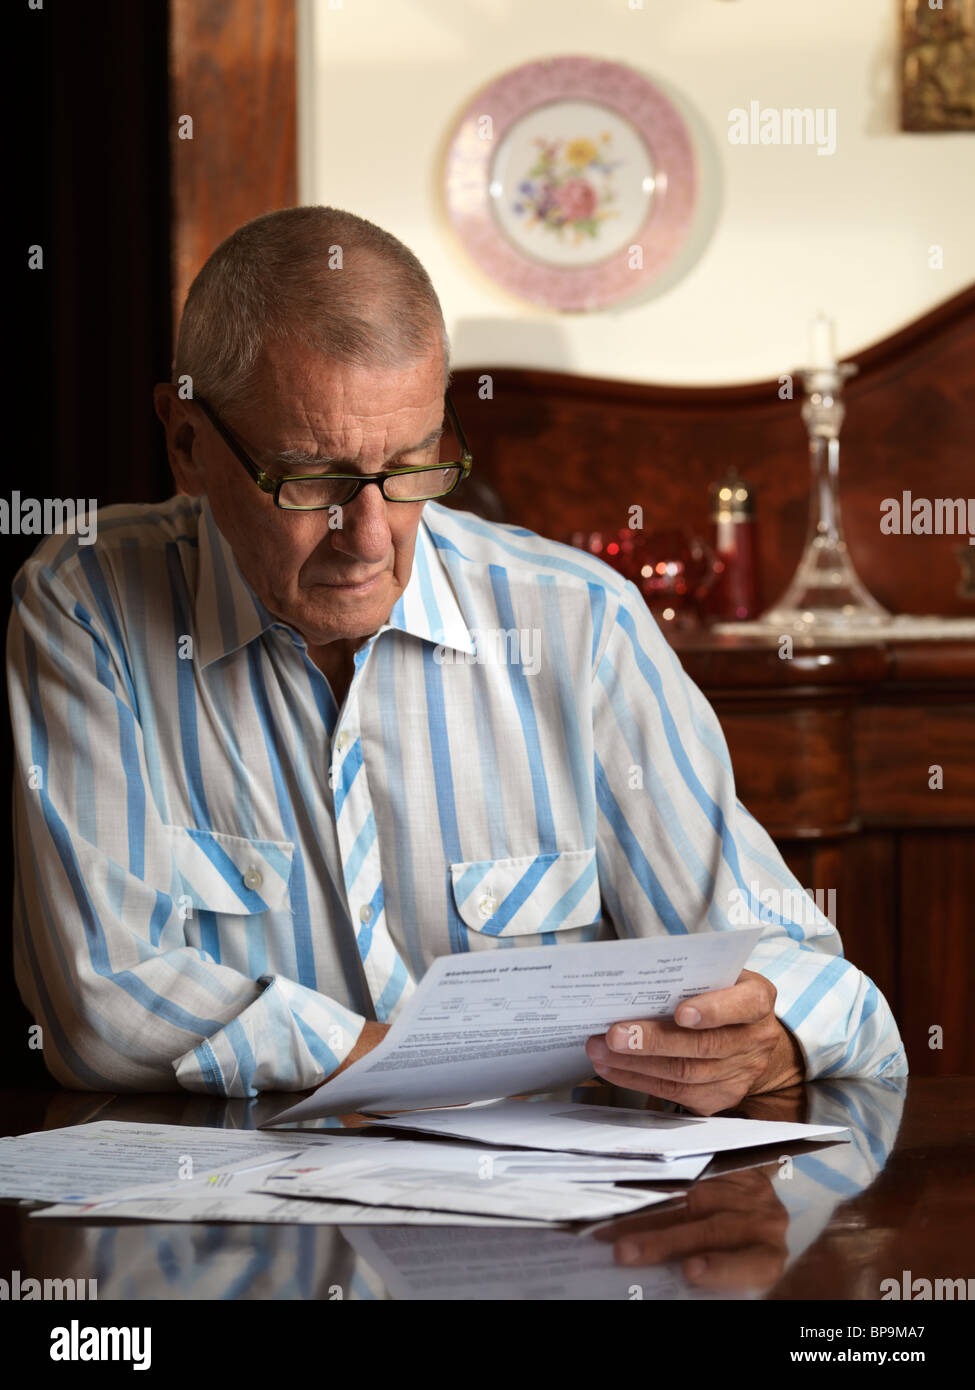 Elderly man sitting at a desk looking through bills Stock Photo